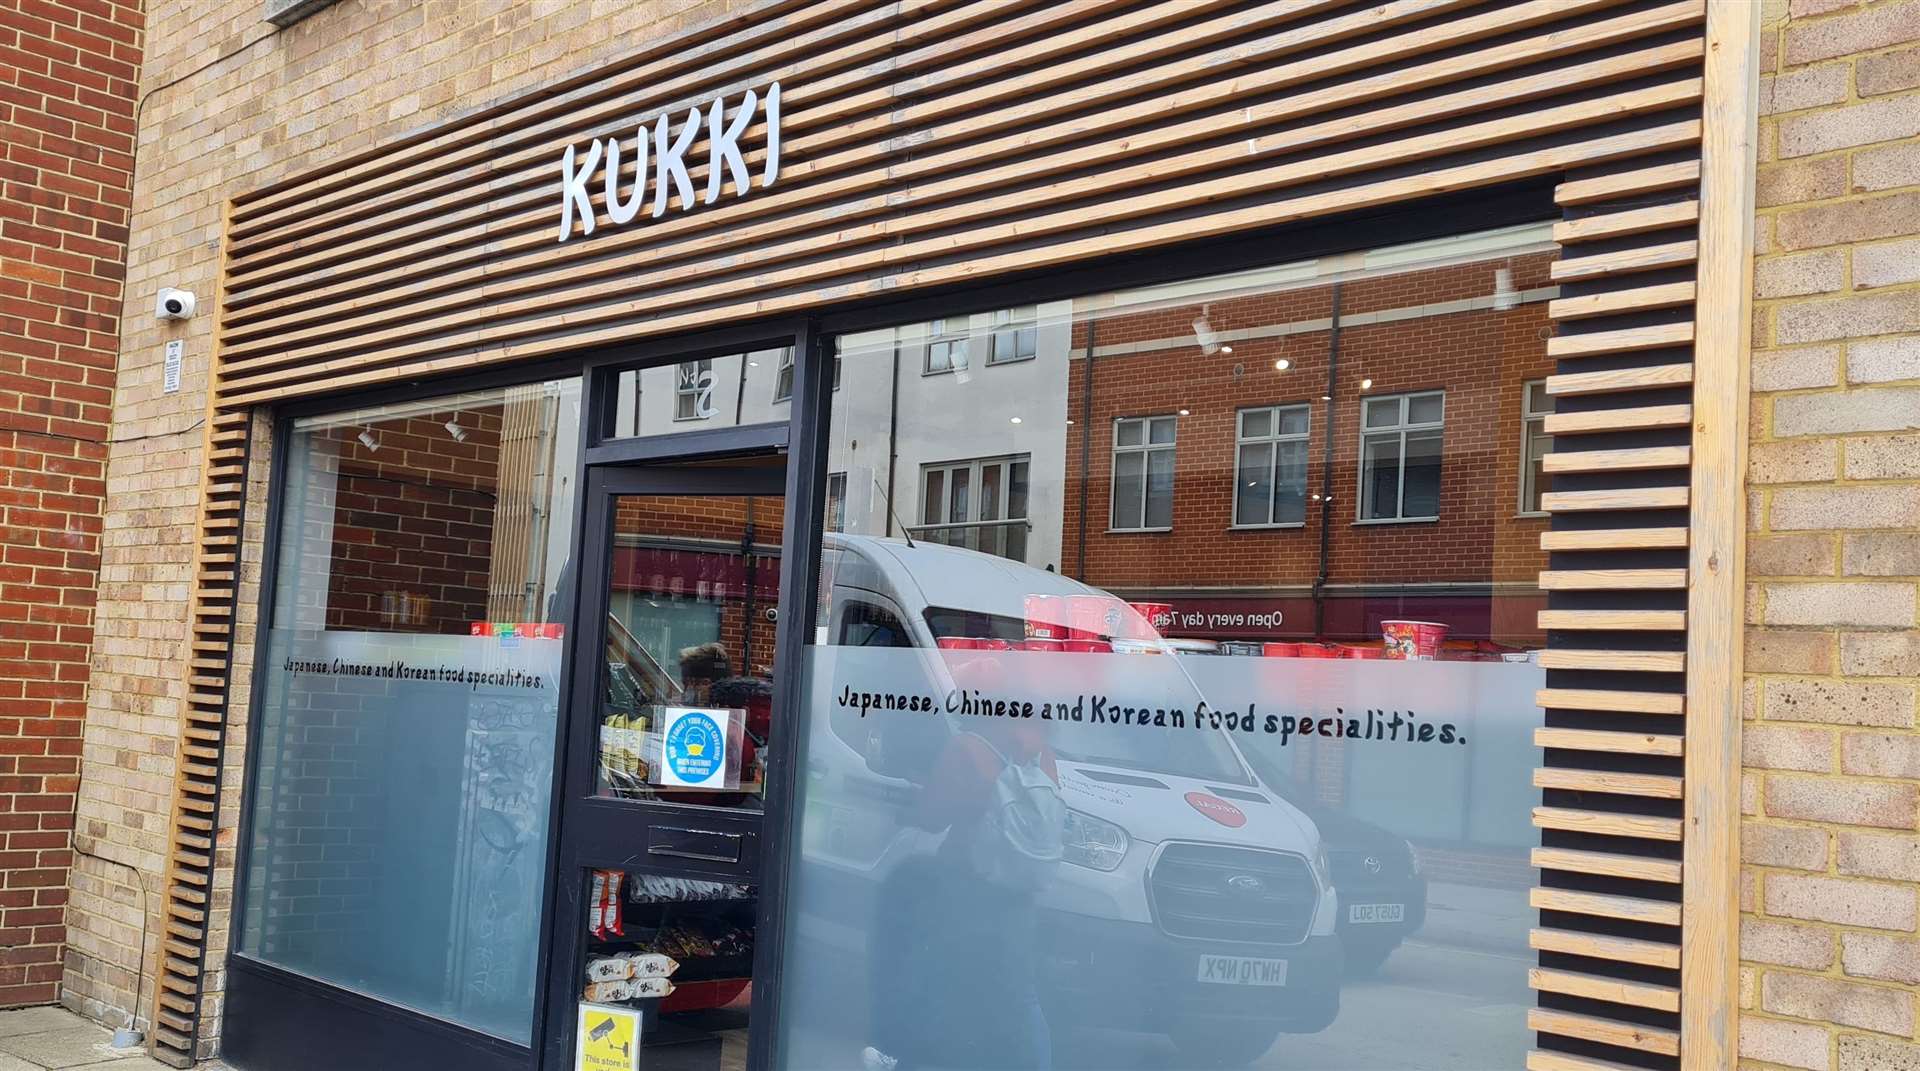 The Kukki Asian food shop in Canterbury